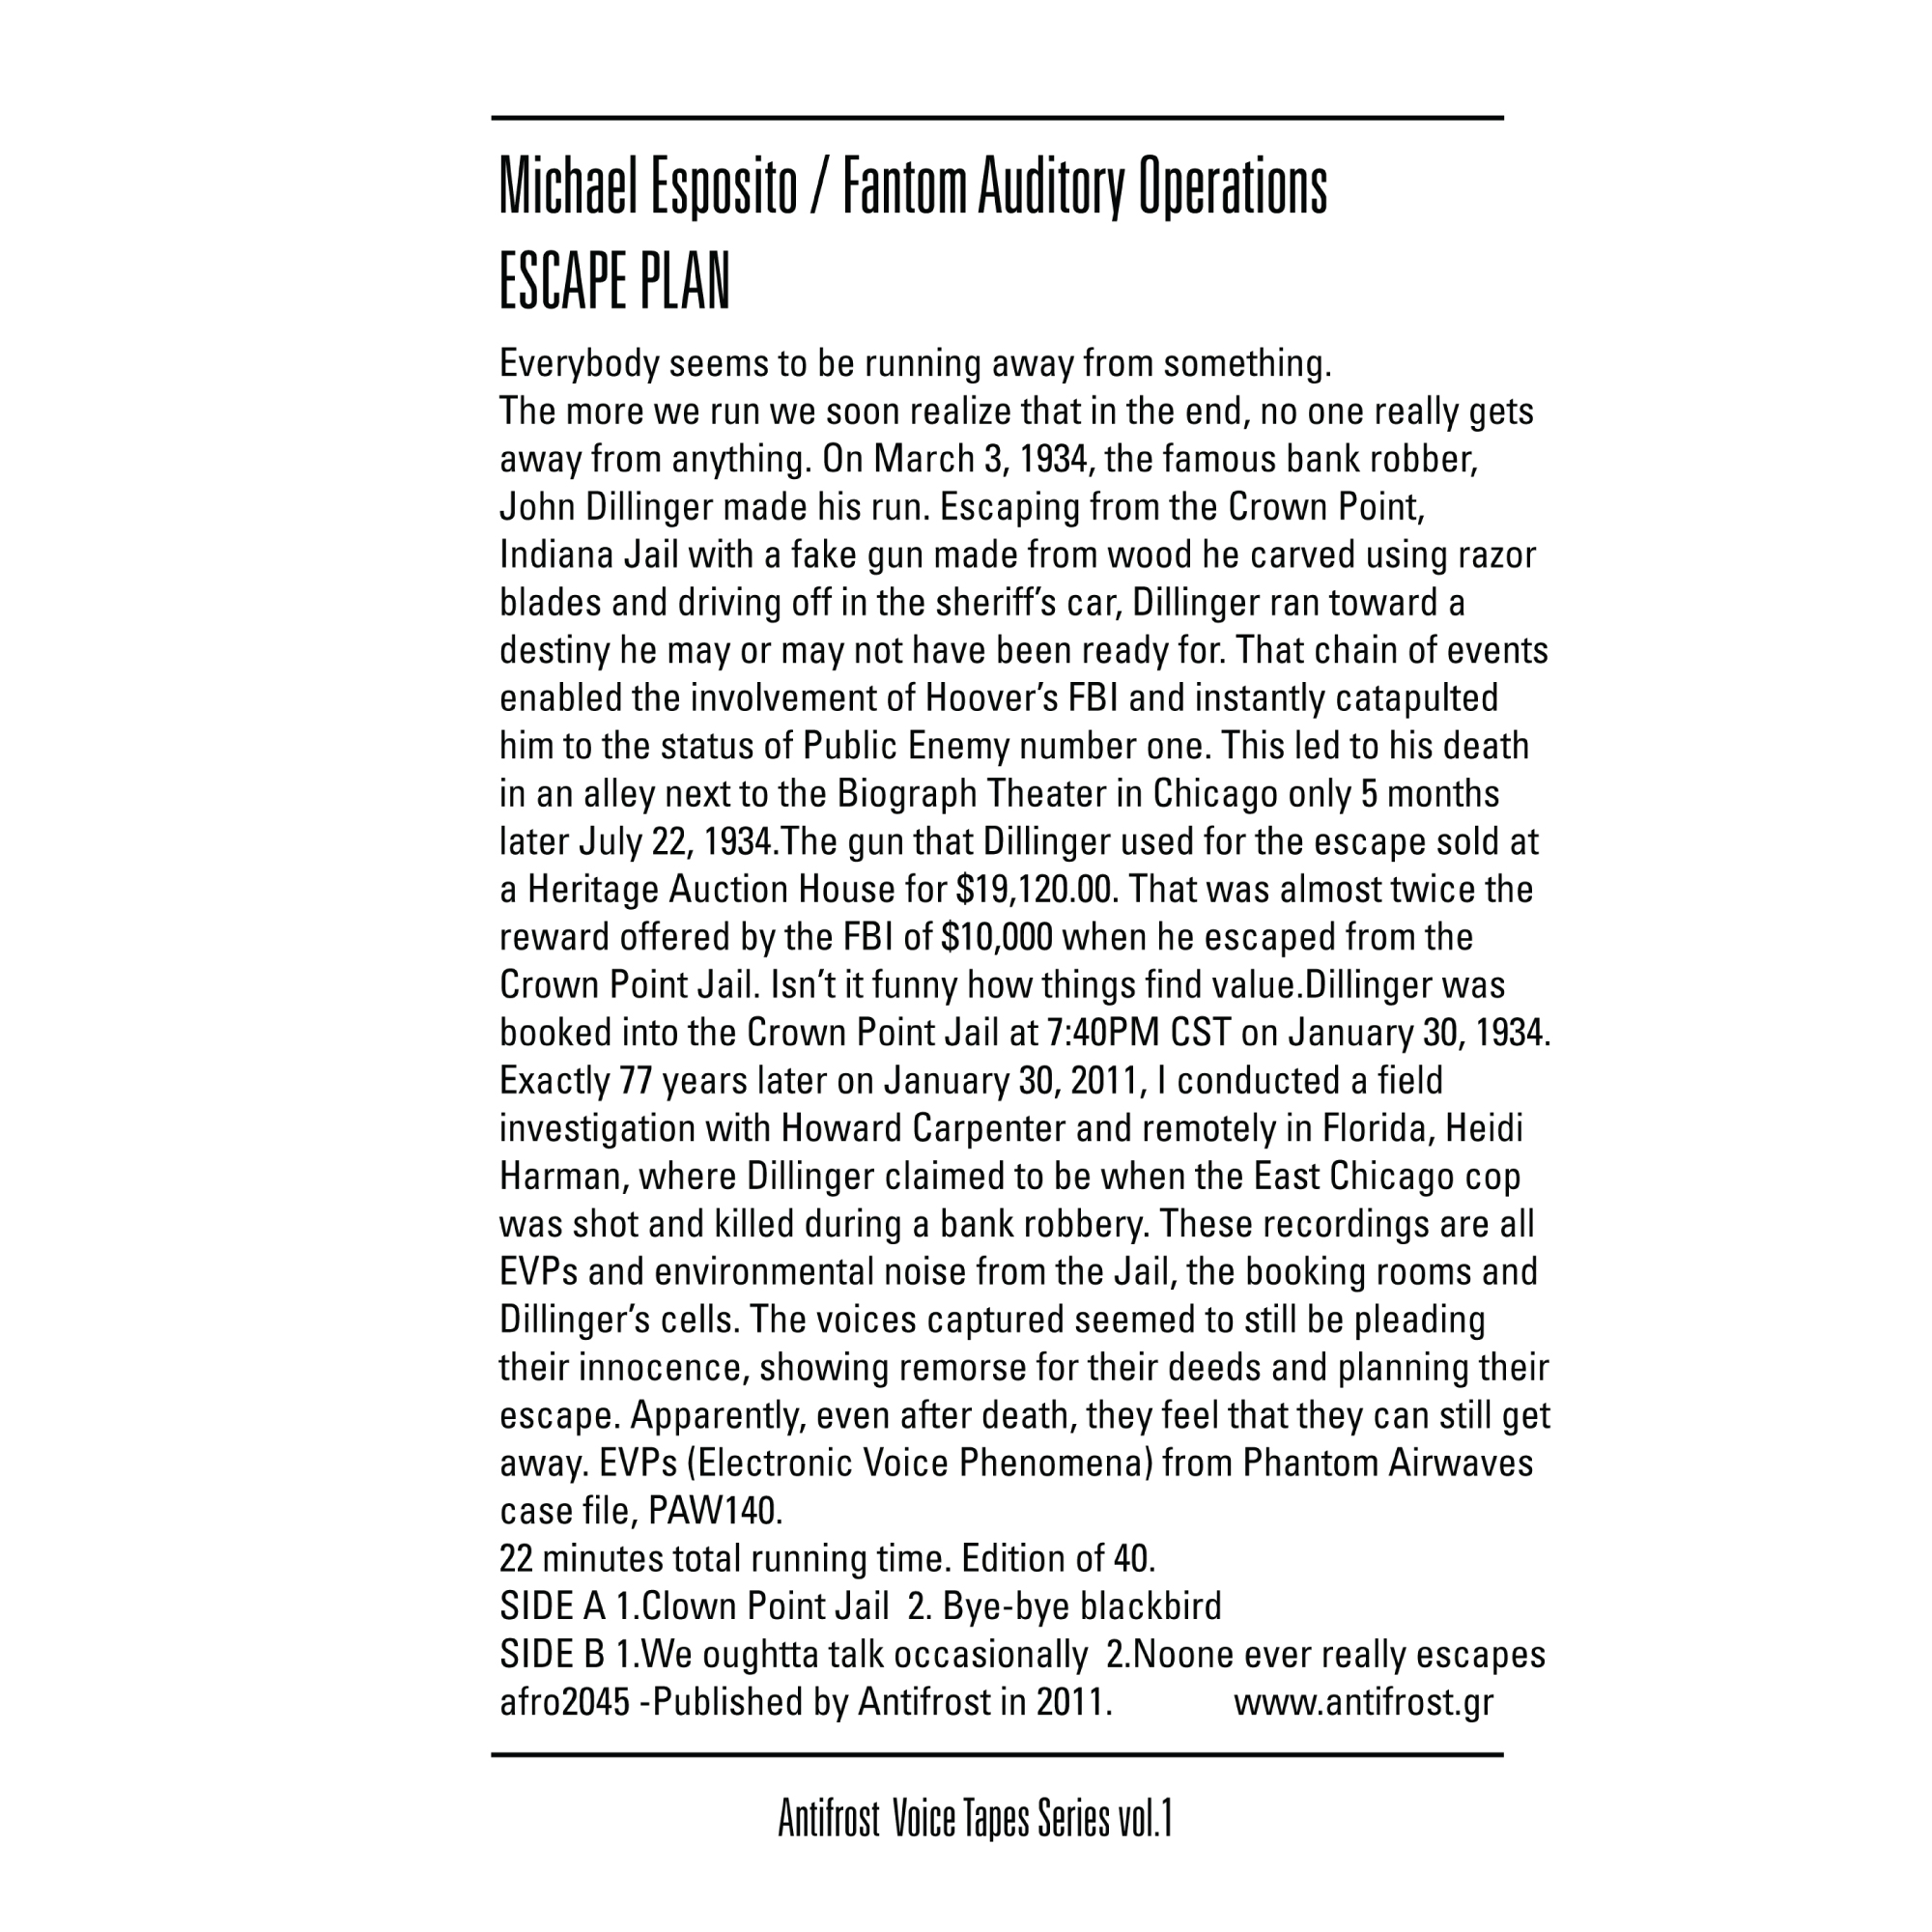 Michael Esposito / Fantom Auditory Operations – Escape plan